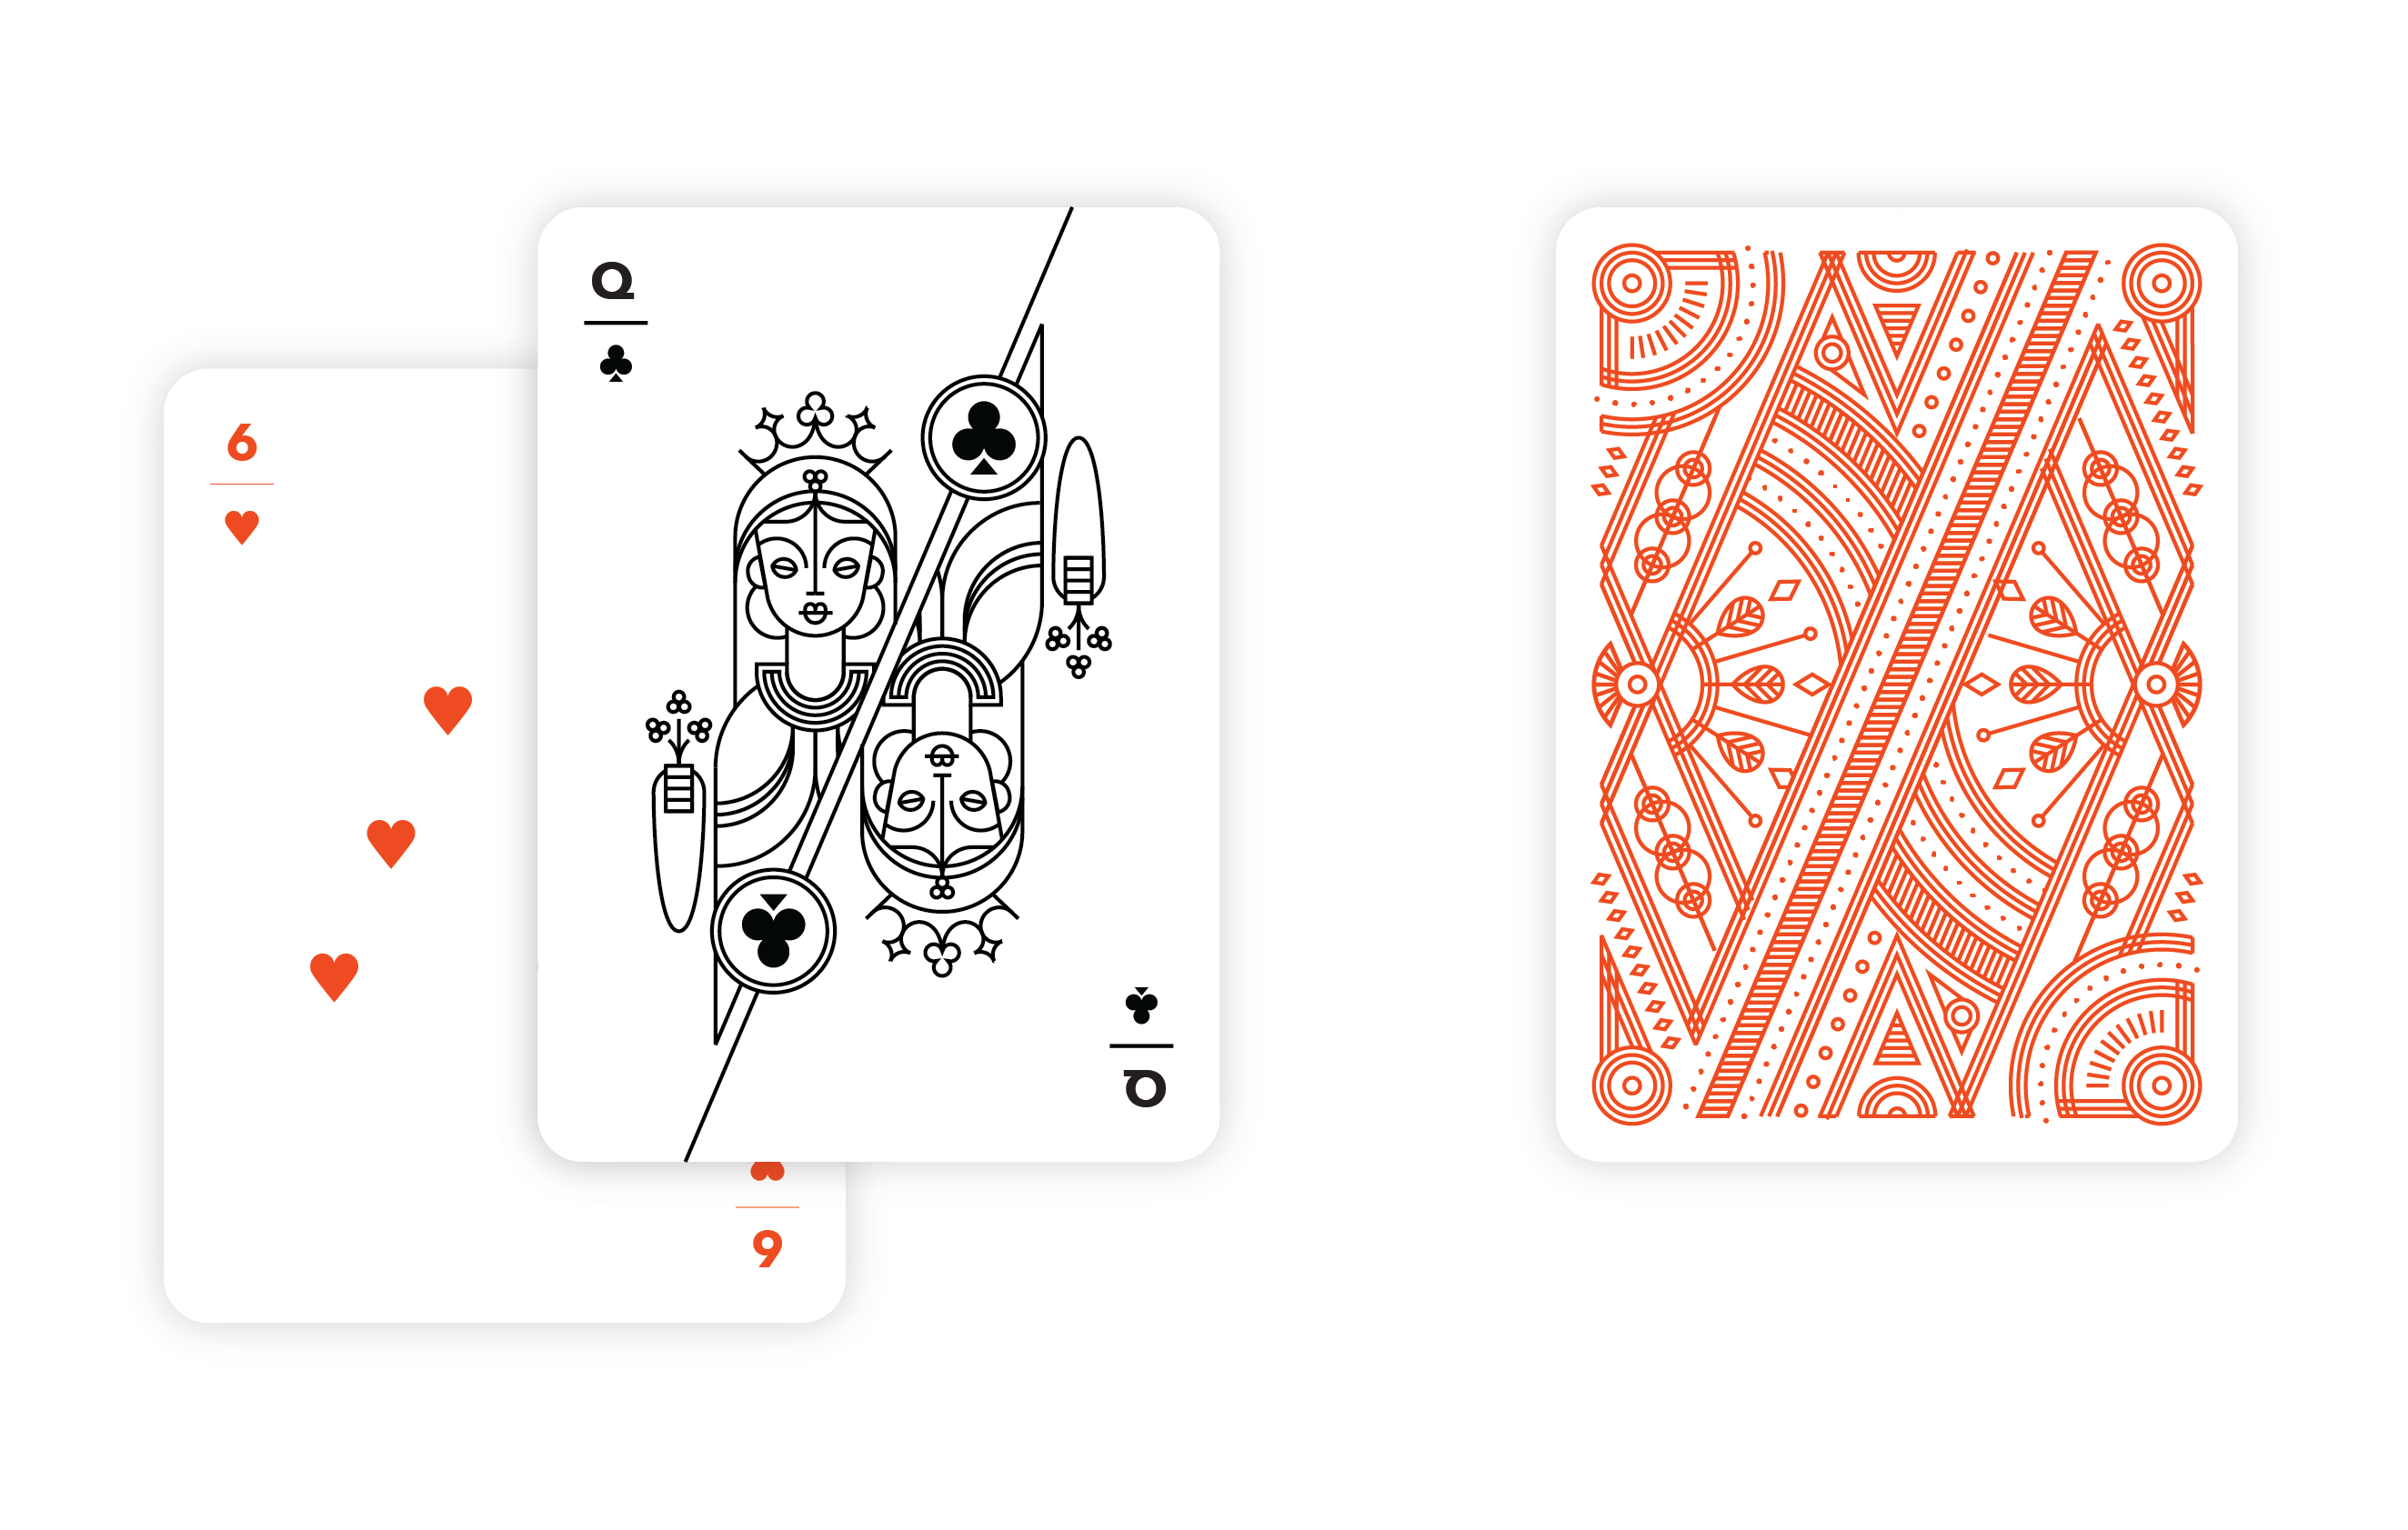 Cool Deck Of Cards Design Hunkie